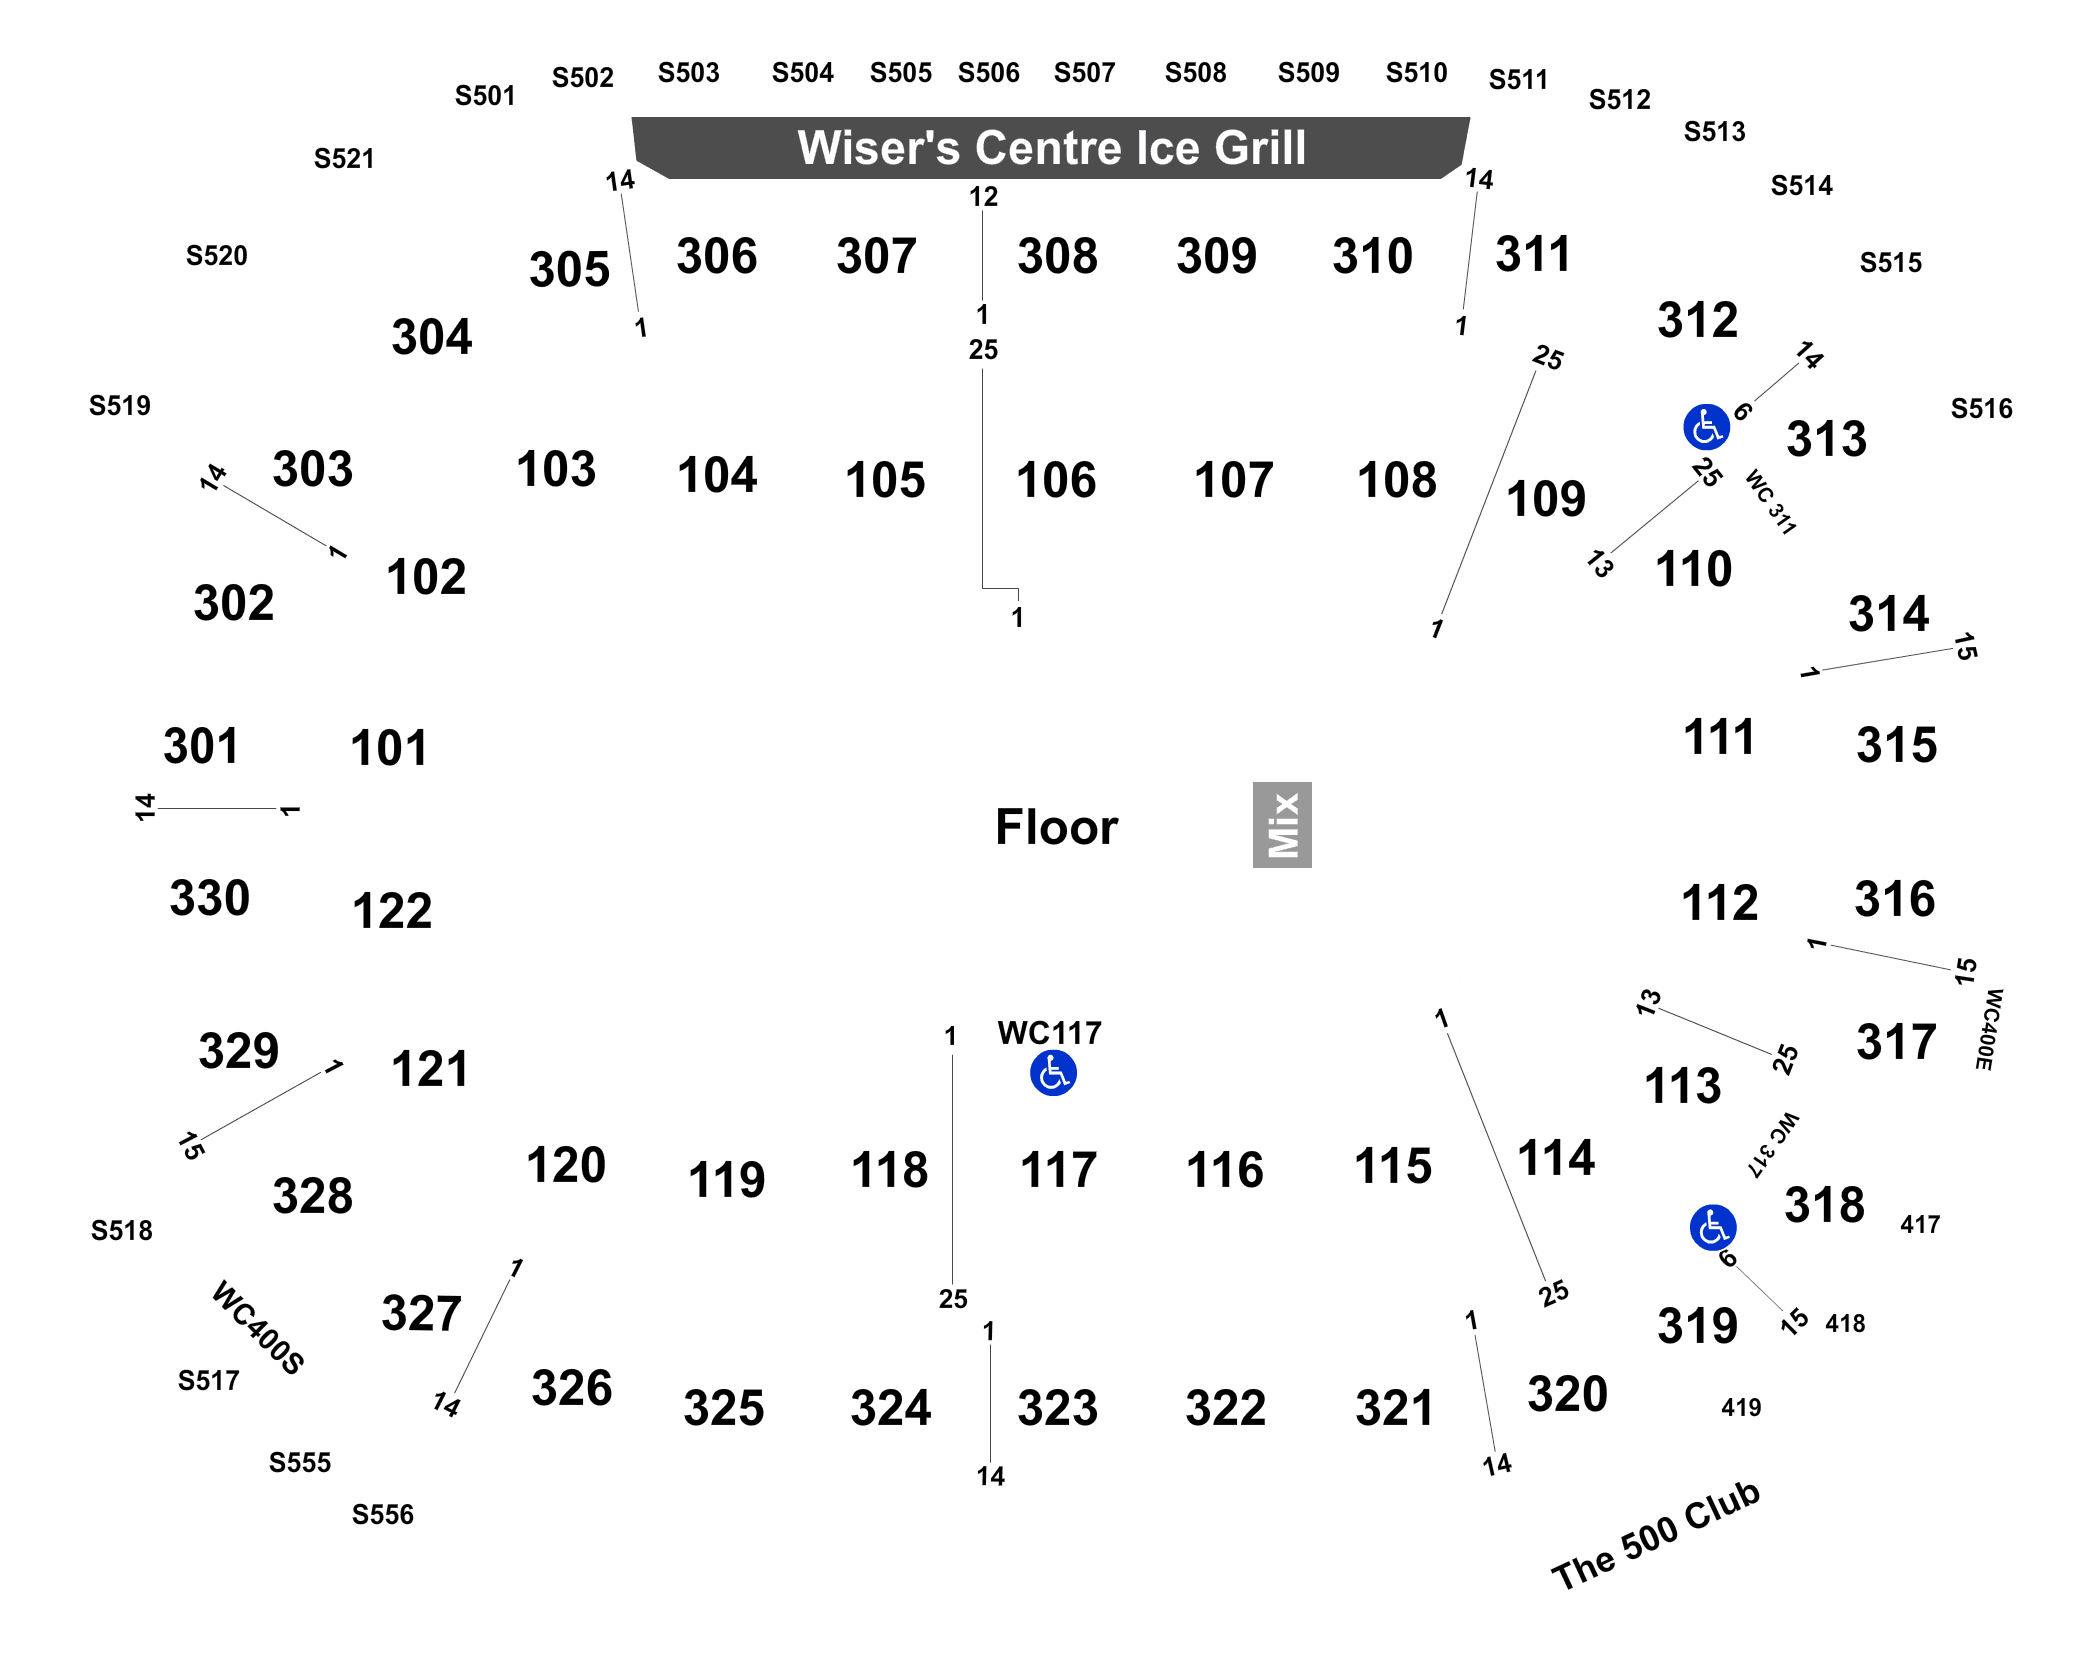 Rogers Arena and Premium Seats